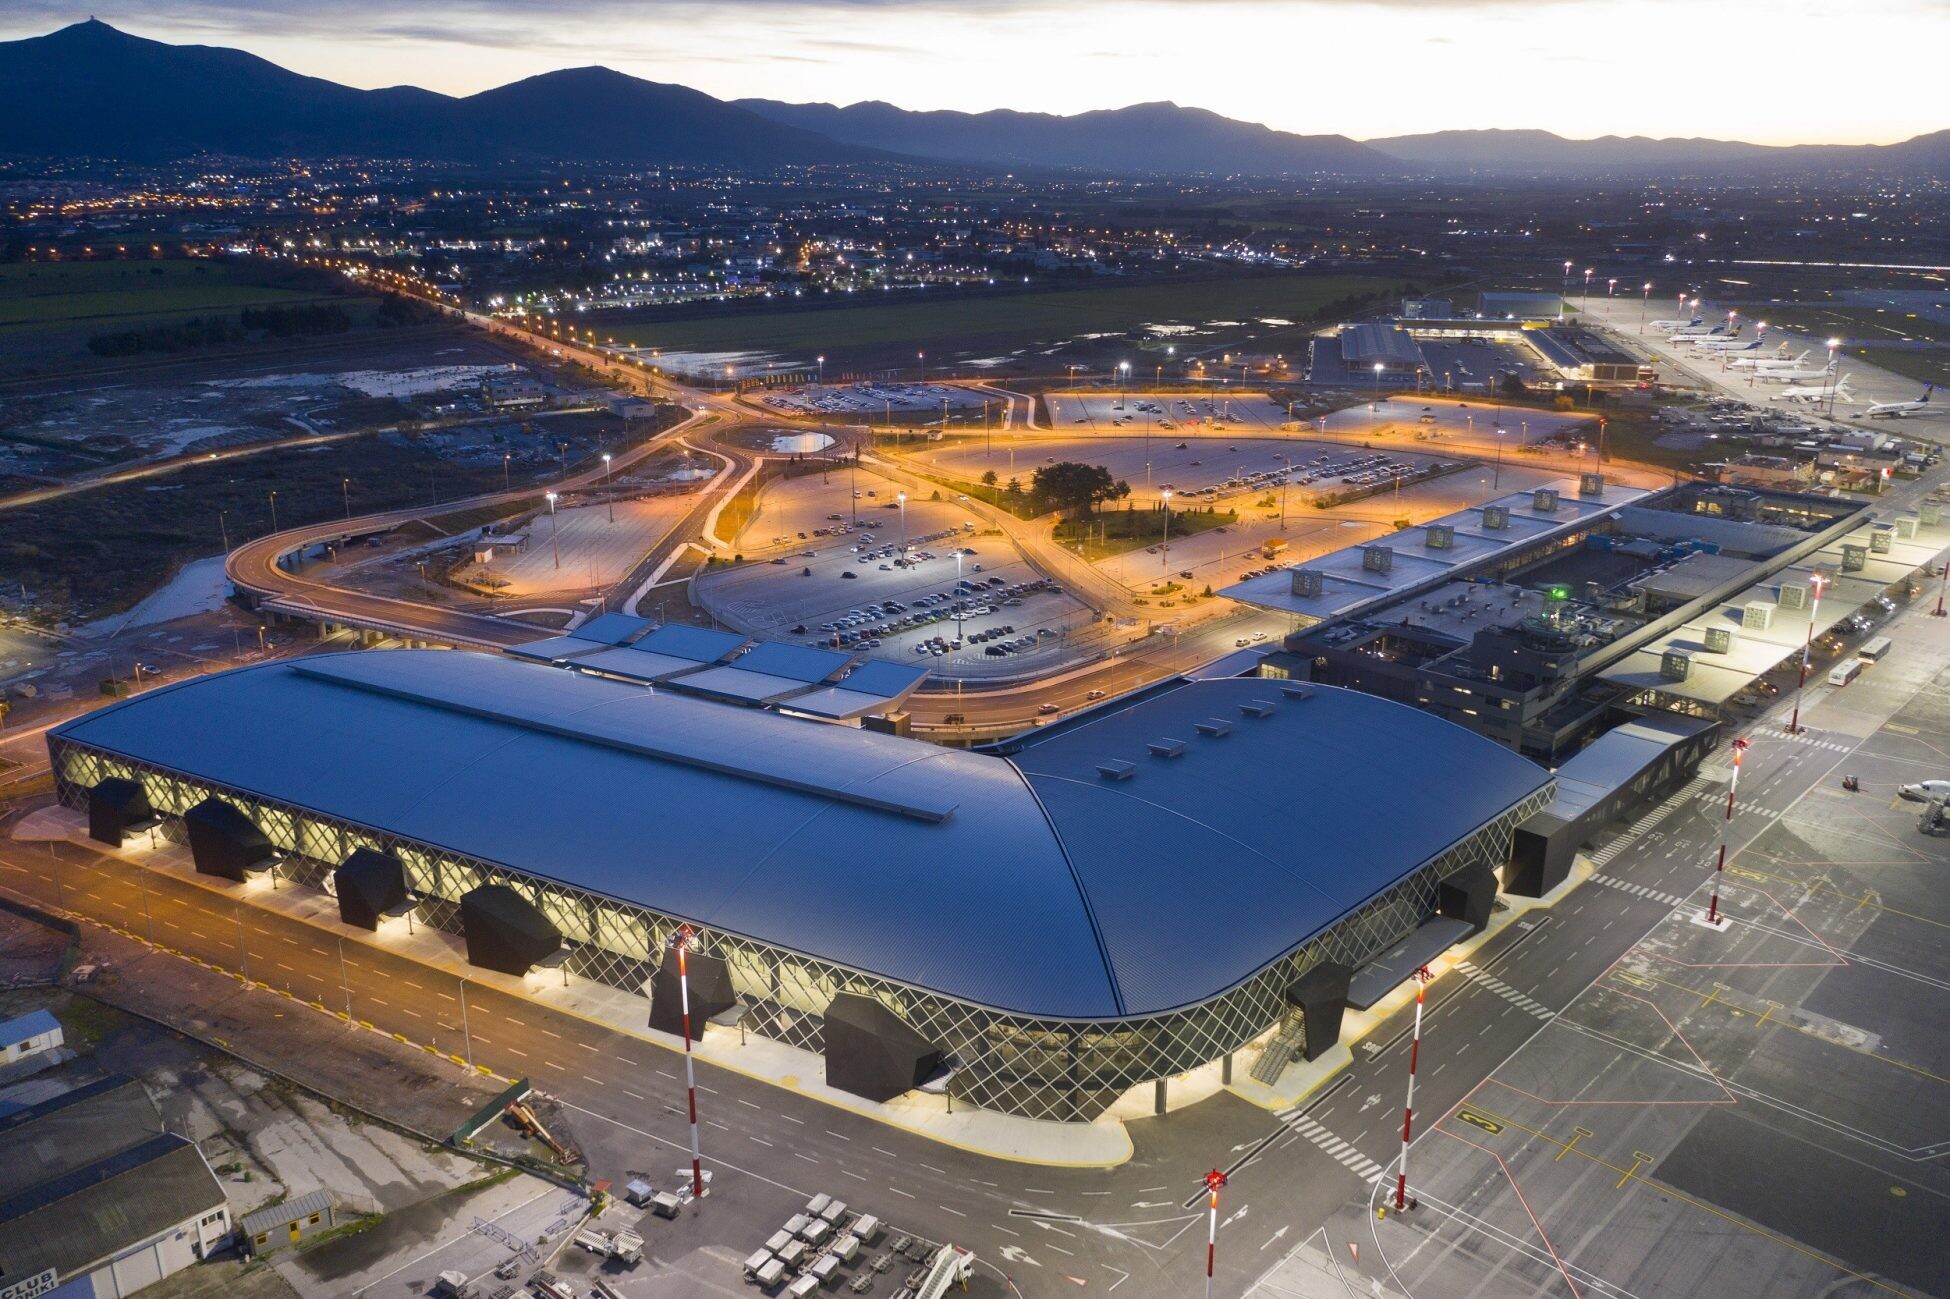 More information about "14 περιφερειακά αεροδρόμια – 14 τοπόσημα μιας νέας εποχής για την Ελλάδα"